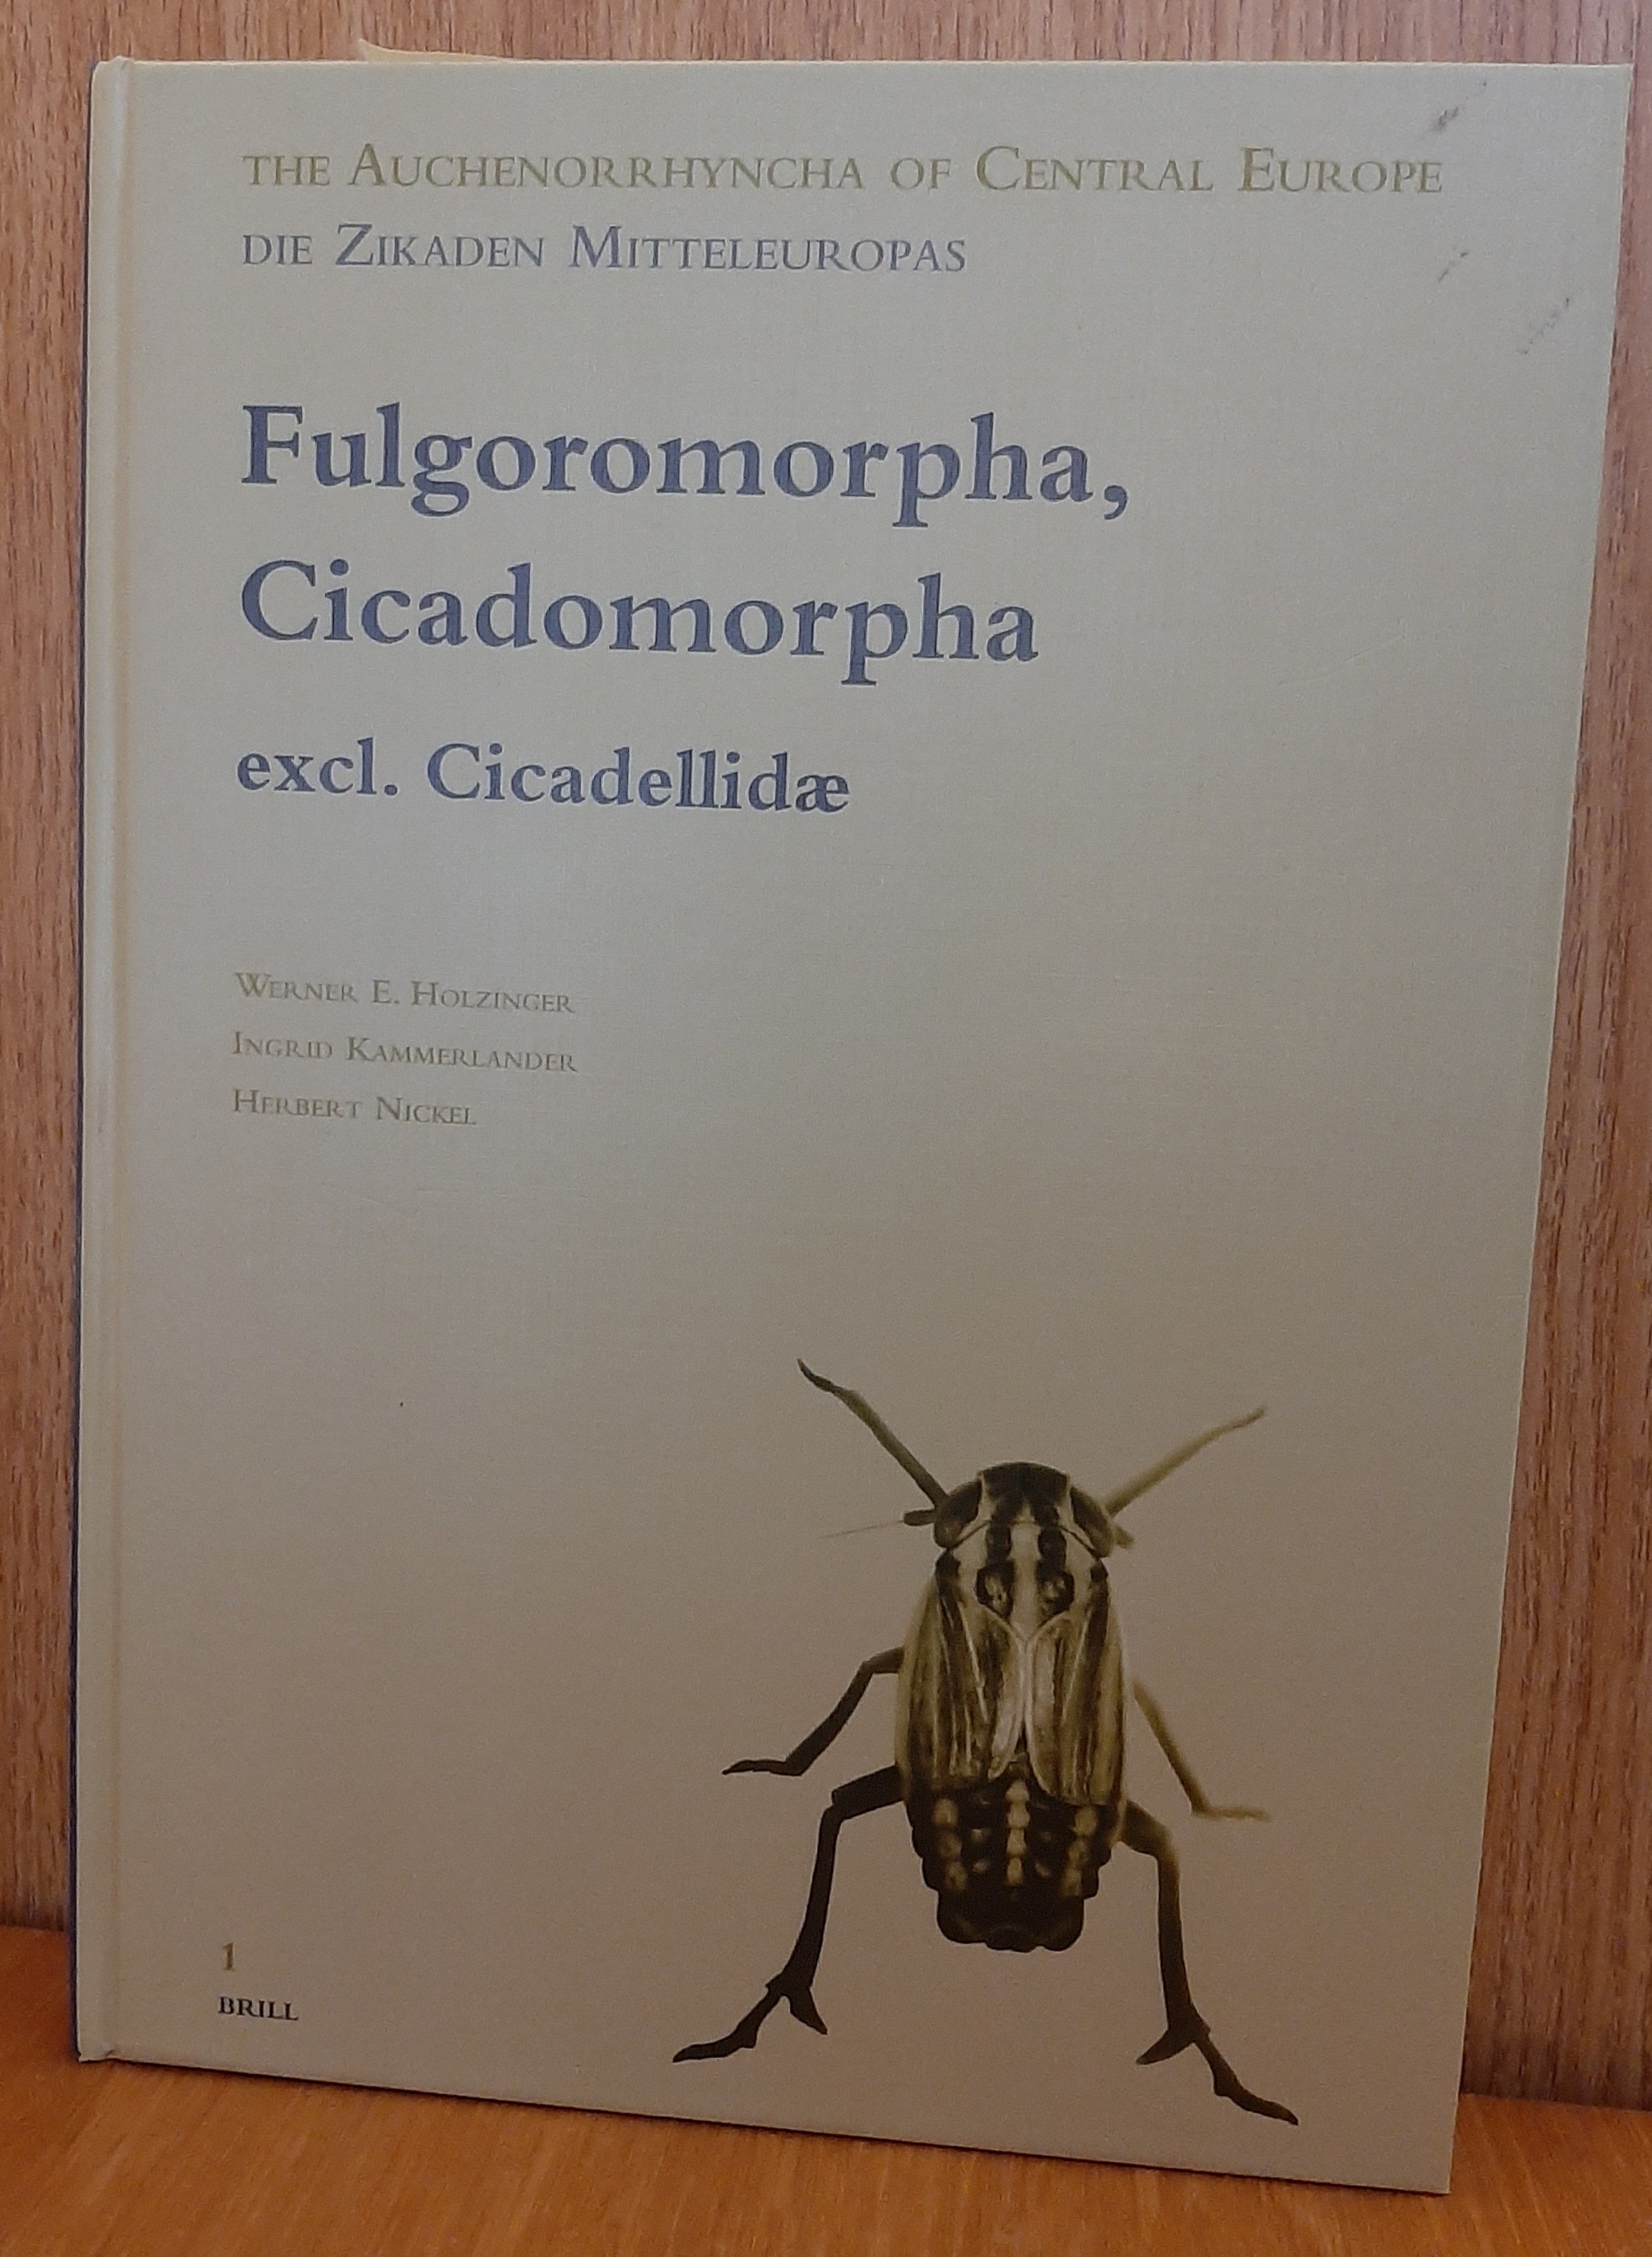 The Auchenorrhyncha of Central Europe Volume 1. - Fulgoromorpha, Cicadomorpha excl. Cicadellidae (Rippl-Rónai Múzeum CC BY-NC-ND)